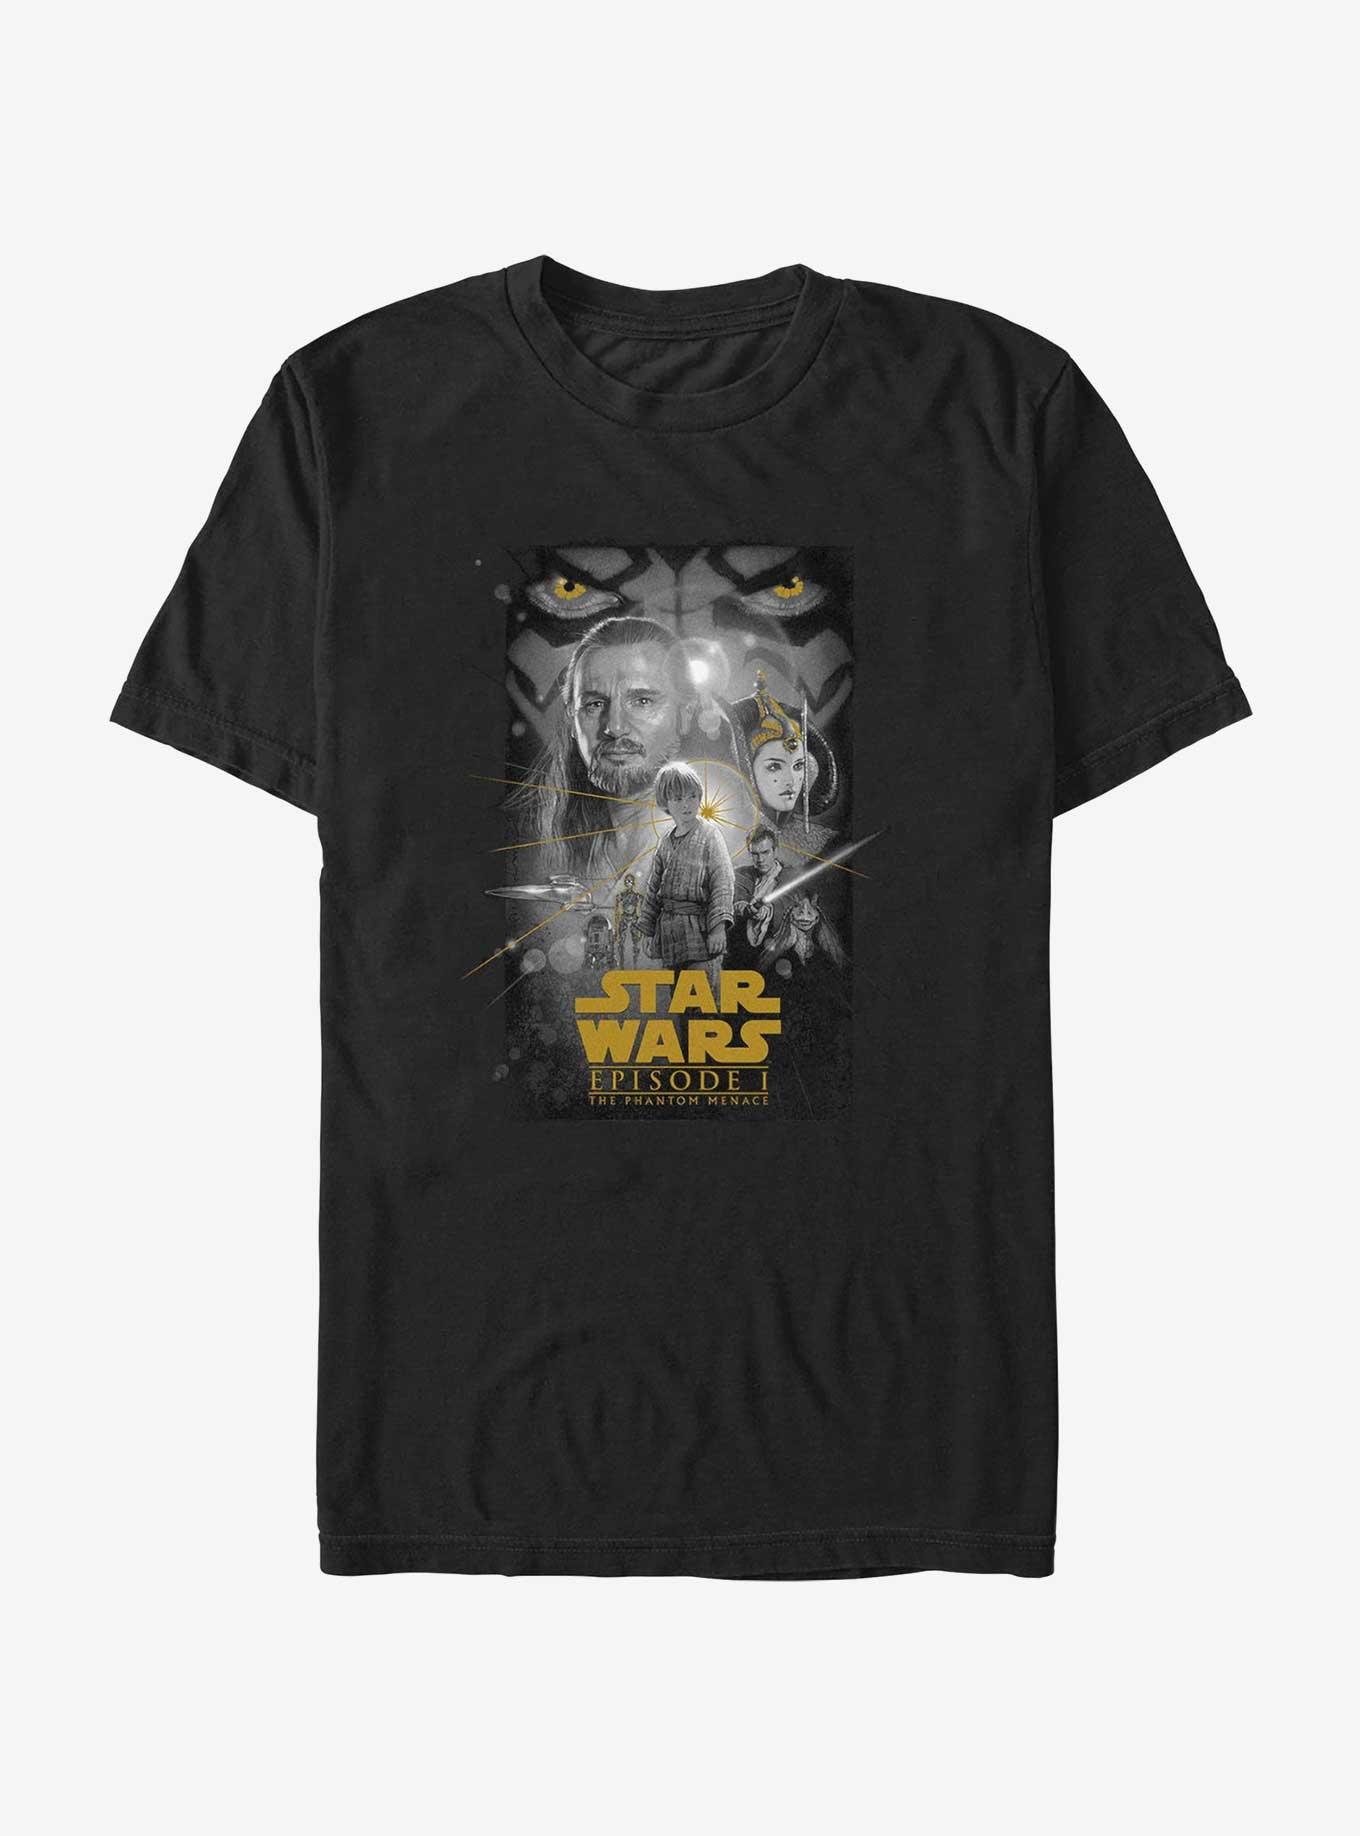 Star Wars Episode I: The Phantom Menace Poster T-Shirt, BLACK, hi-res